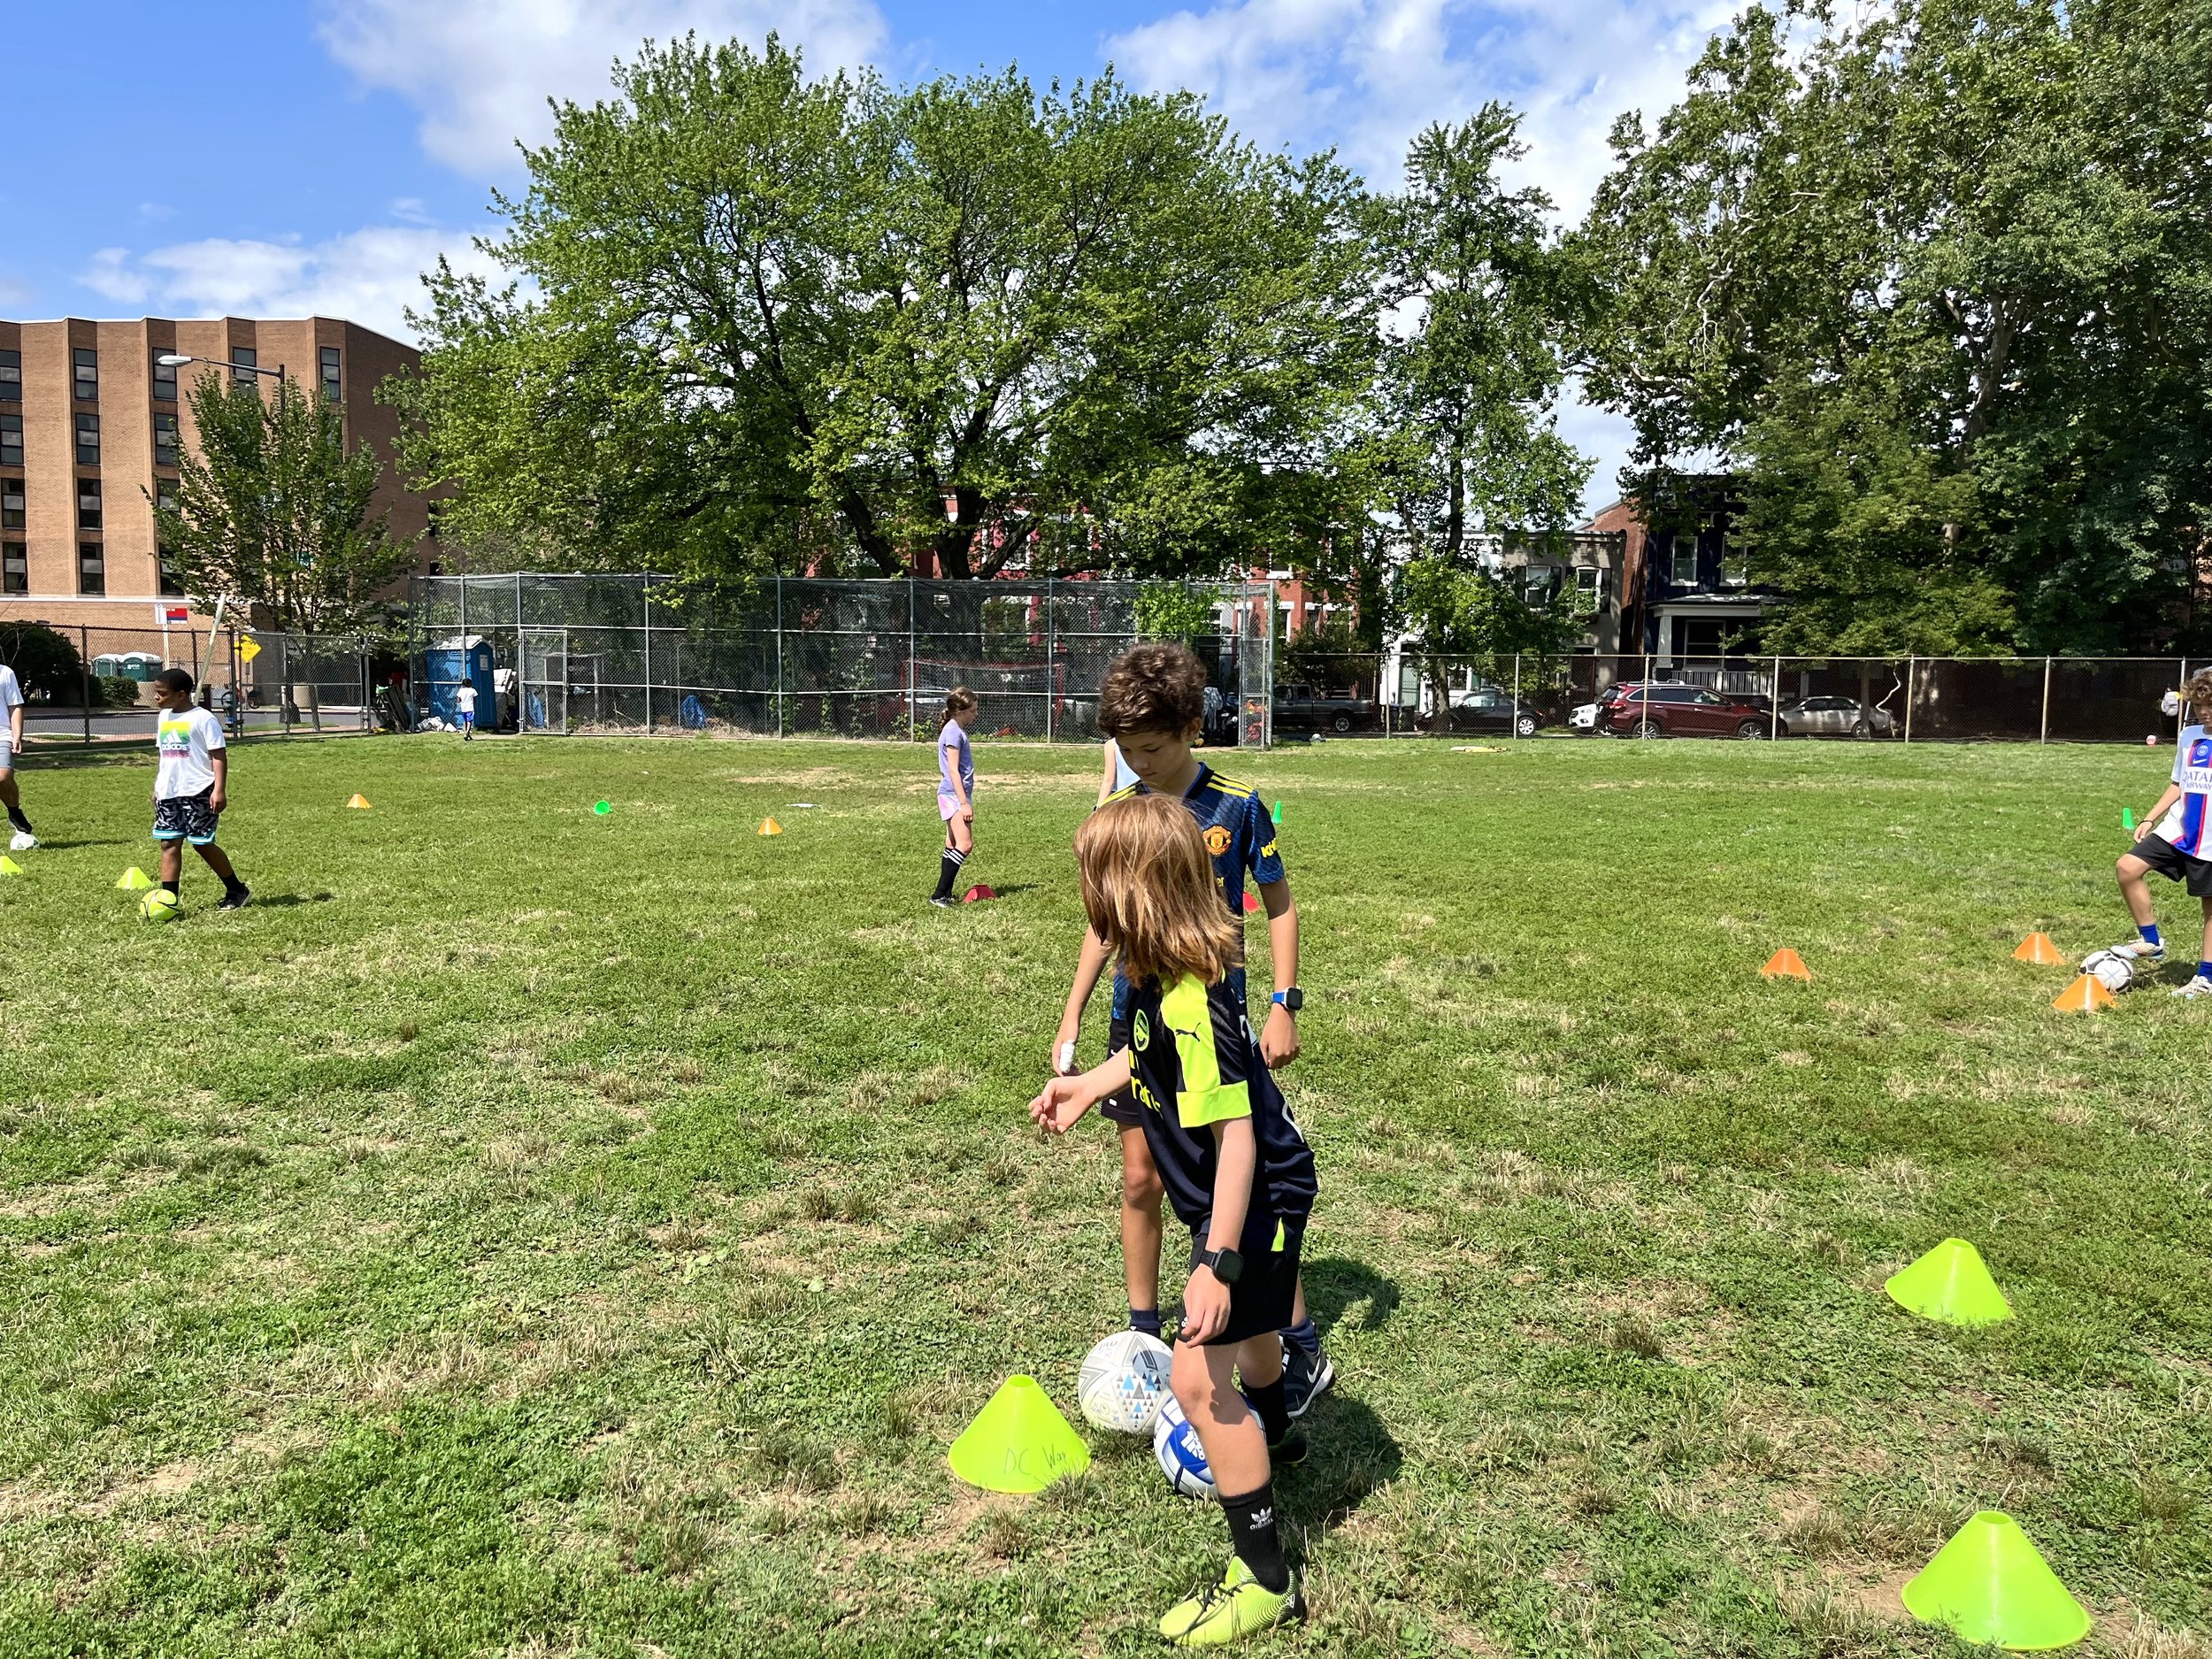 Dc-way-soccer-club-for-kids-in-washington-dc-summer-camp-at-tyler-elementary-school- 8560.jpeg